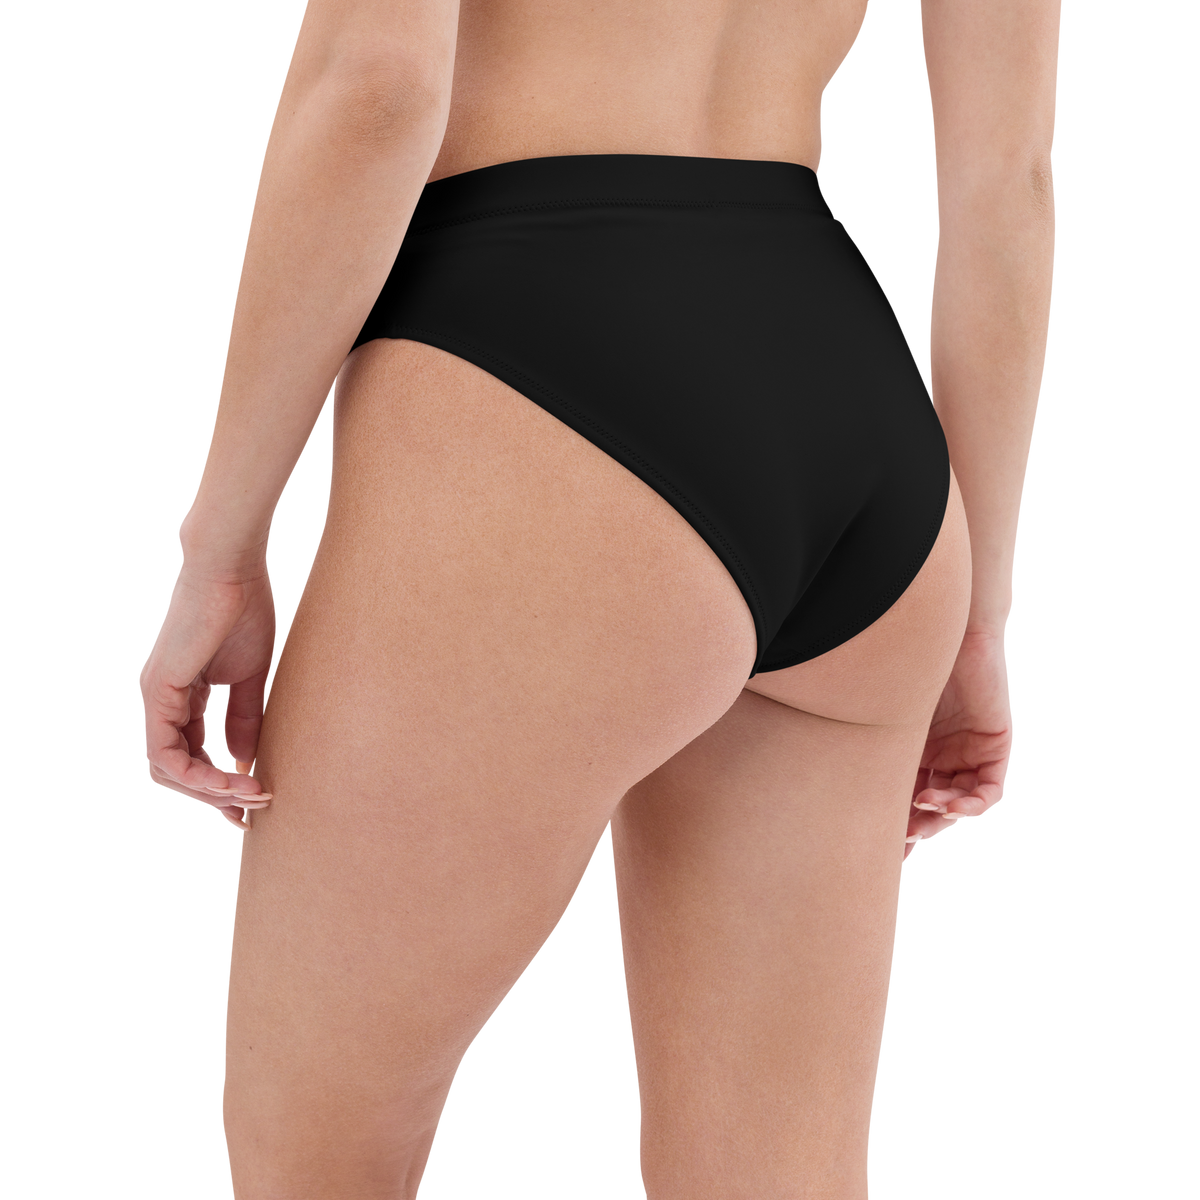 Velisse Origin bikini bottom, high-waisted bikini bottom, black bikini bottom, unicorn, simple bikini